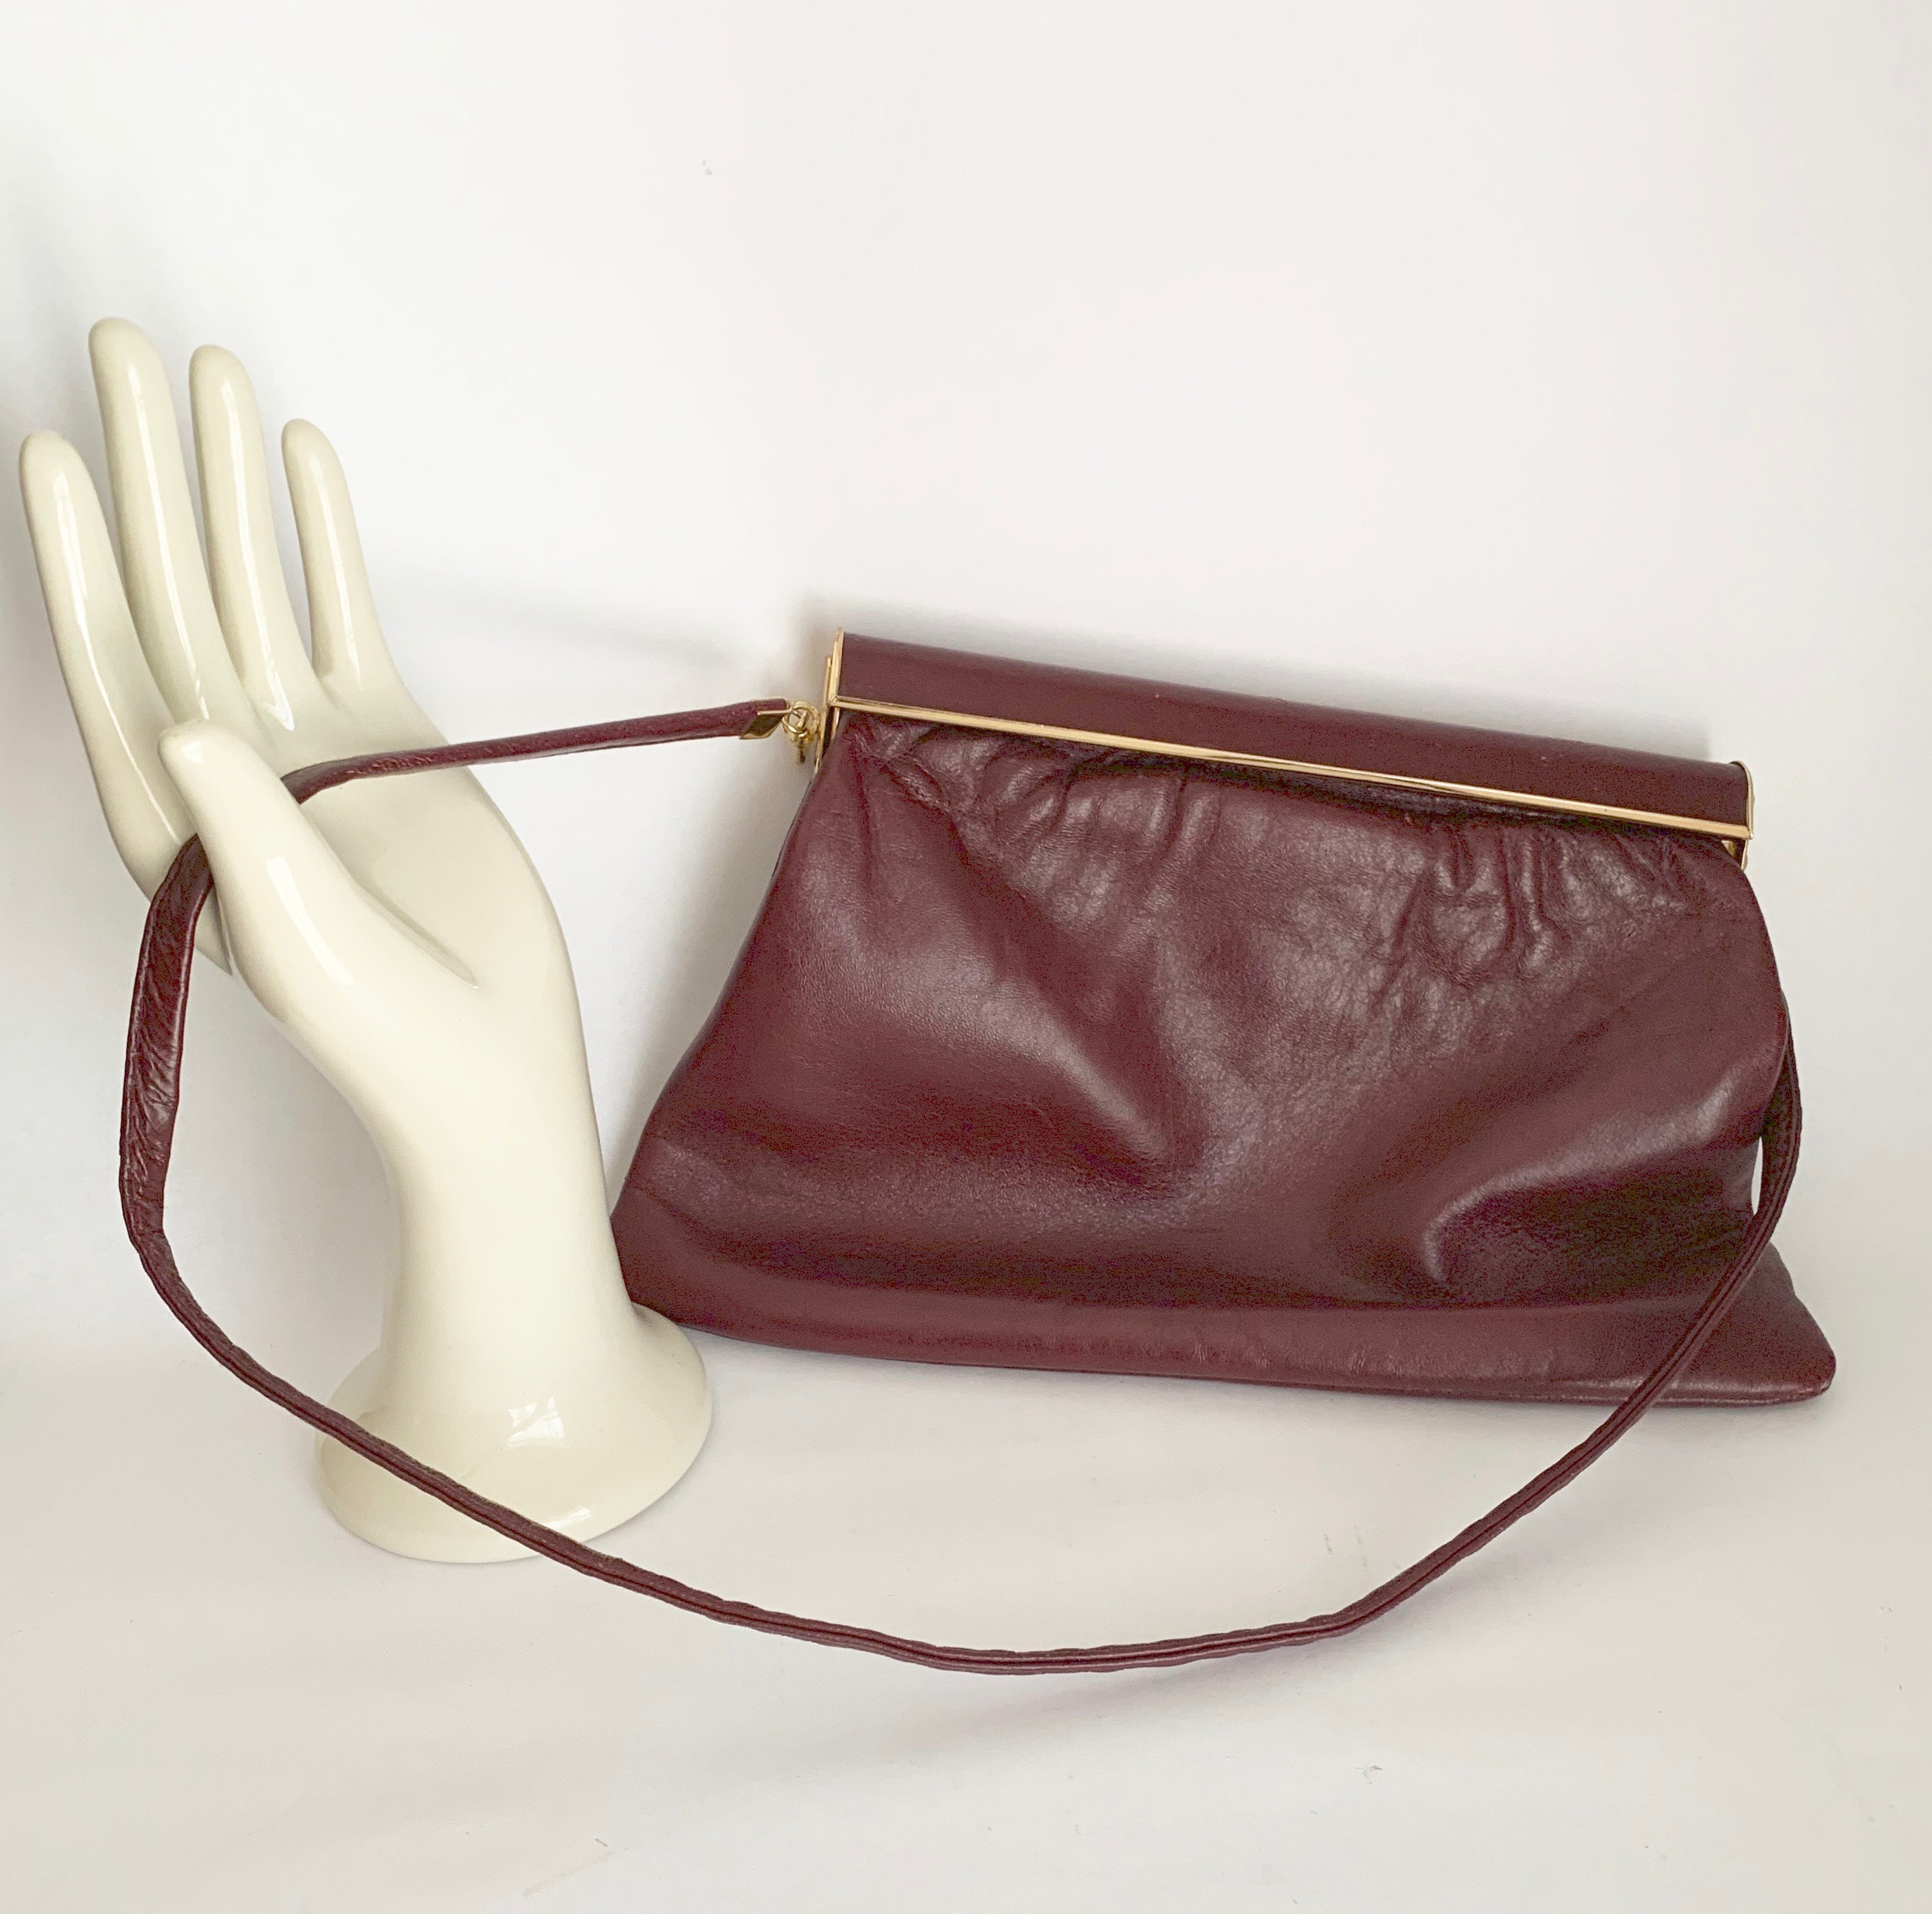 Jane Shilton Red Leather Clutch, Purse, Wallet With Wrist Strap | eBay